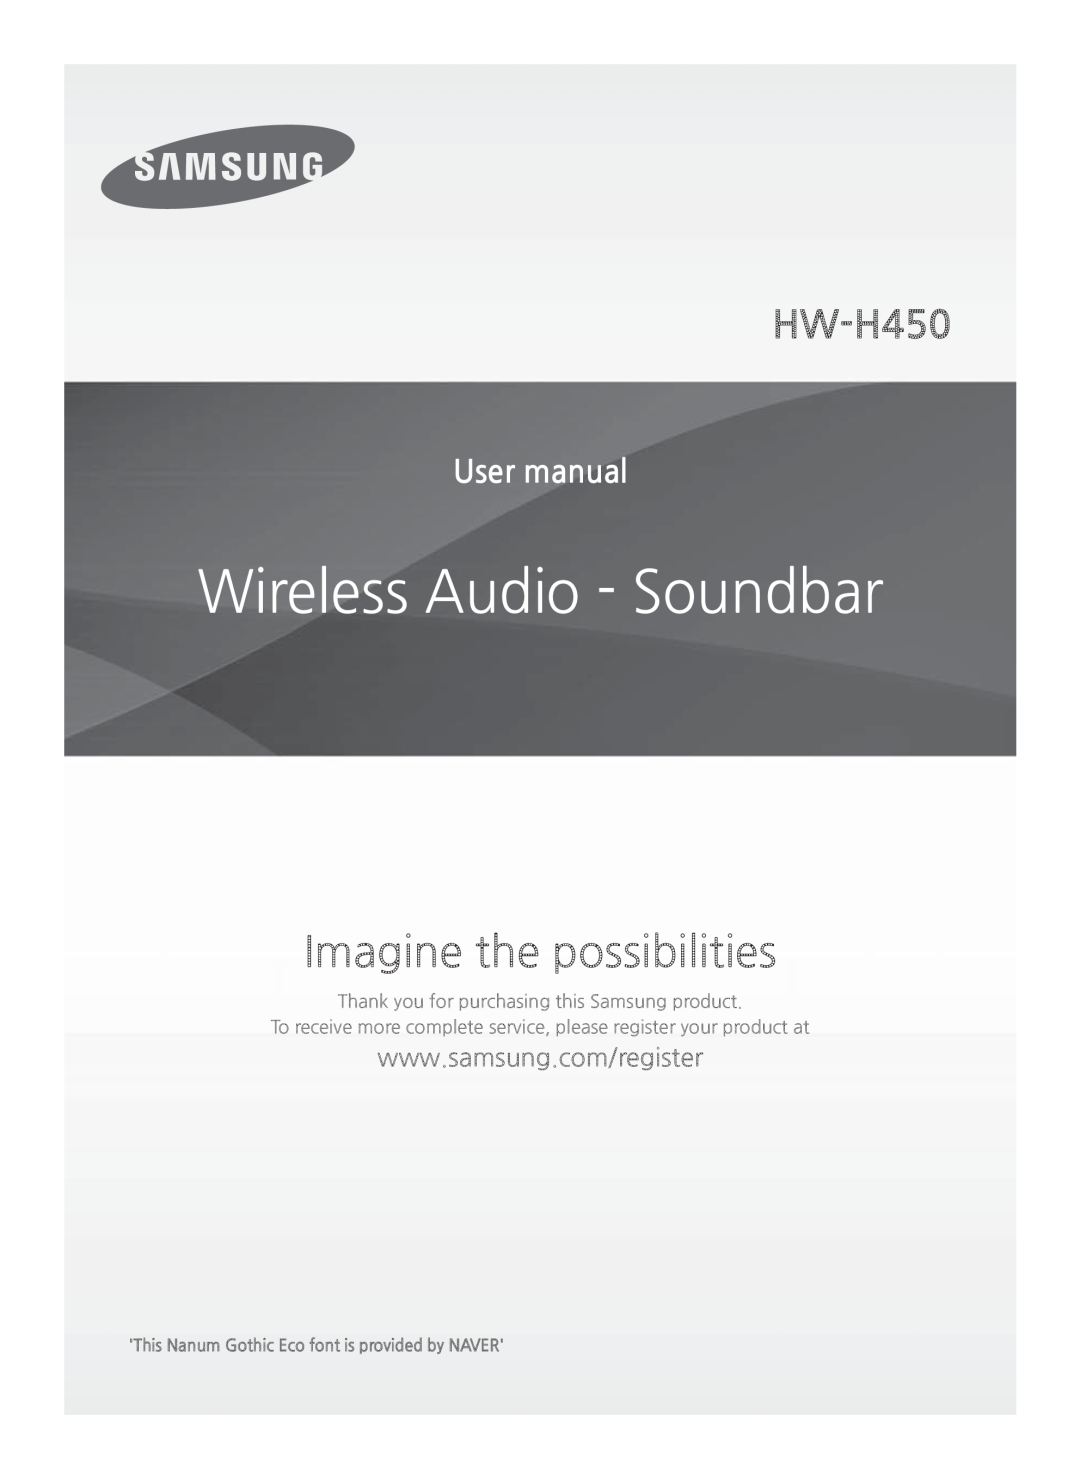 Samsung HW-H450/ZA manual Wireless Audio - Soundbar, Imagine the possibilities 